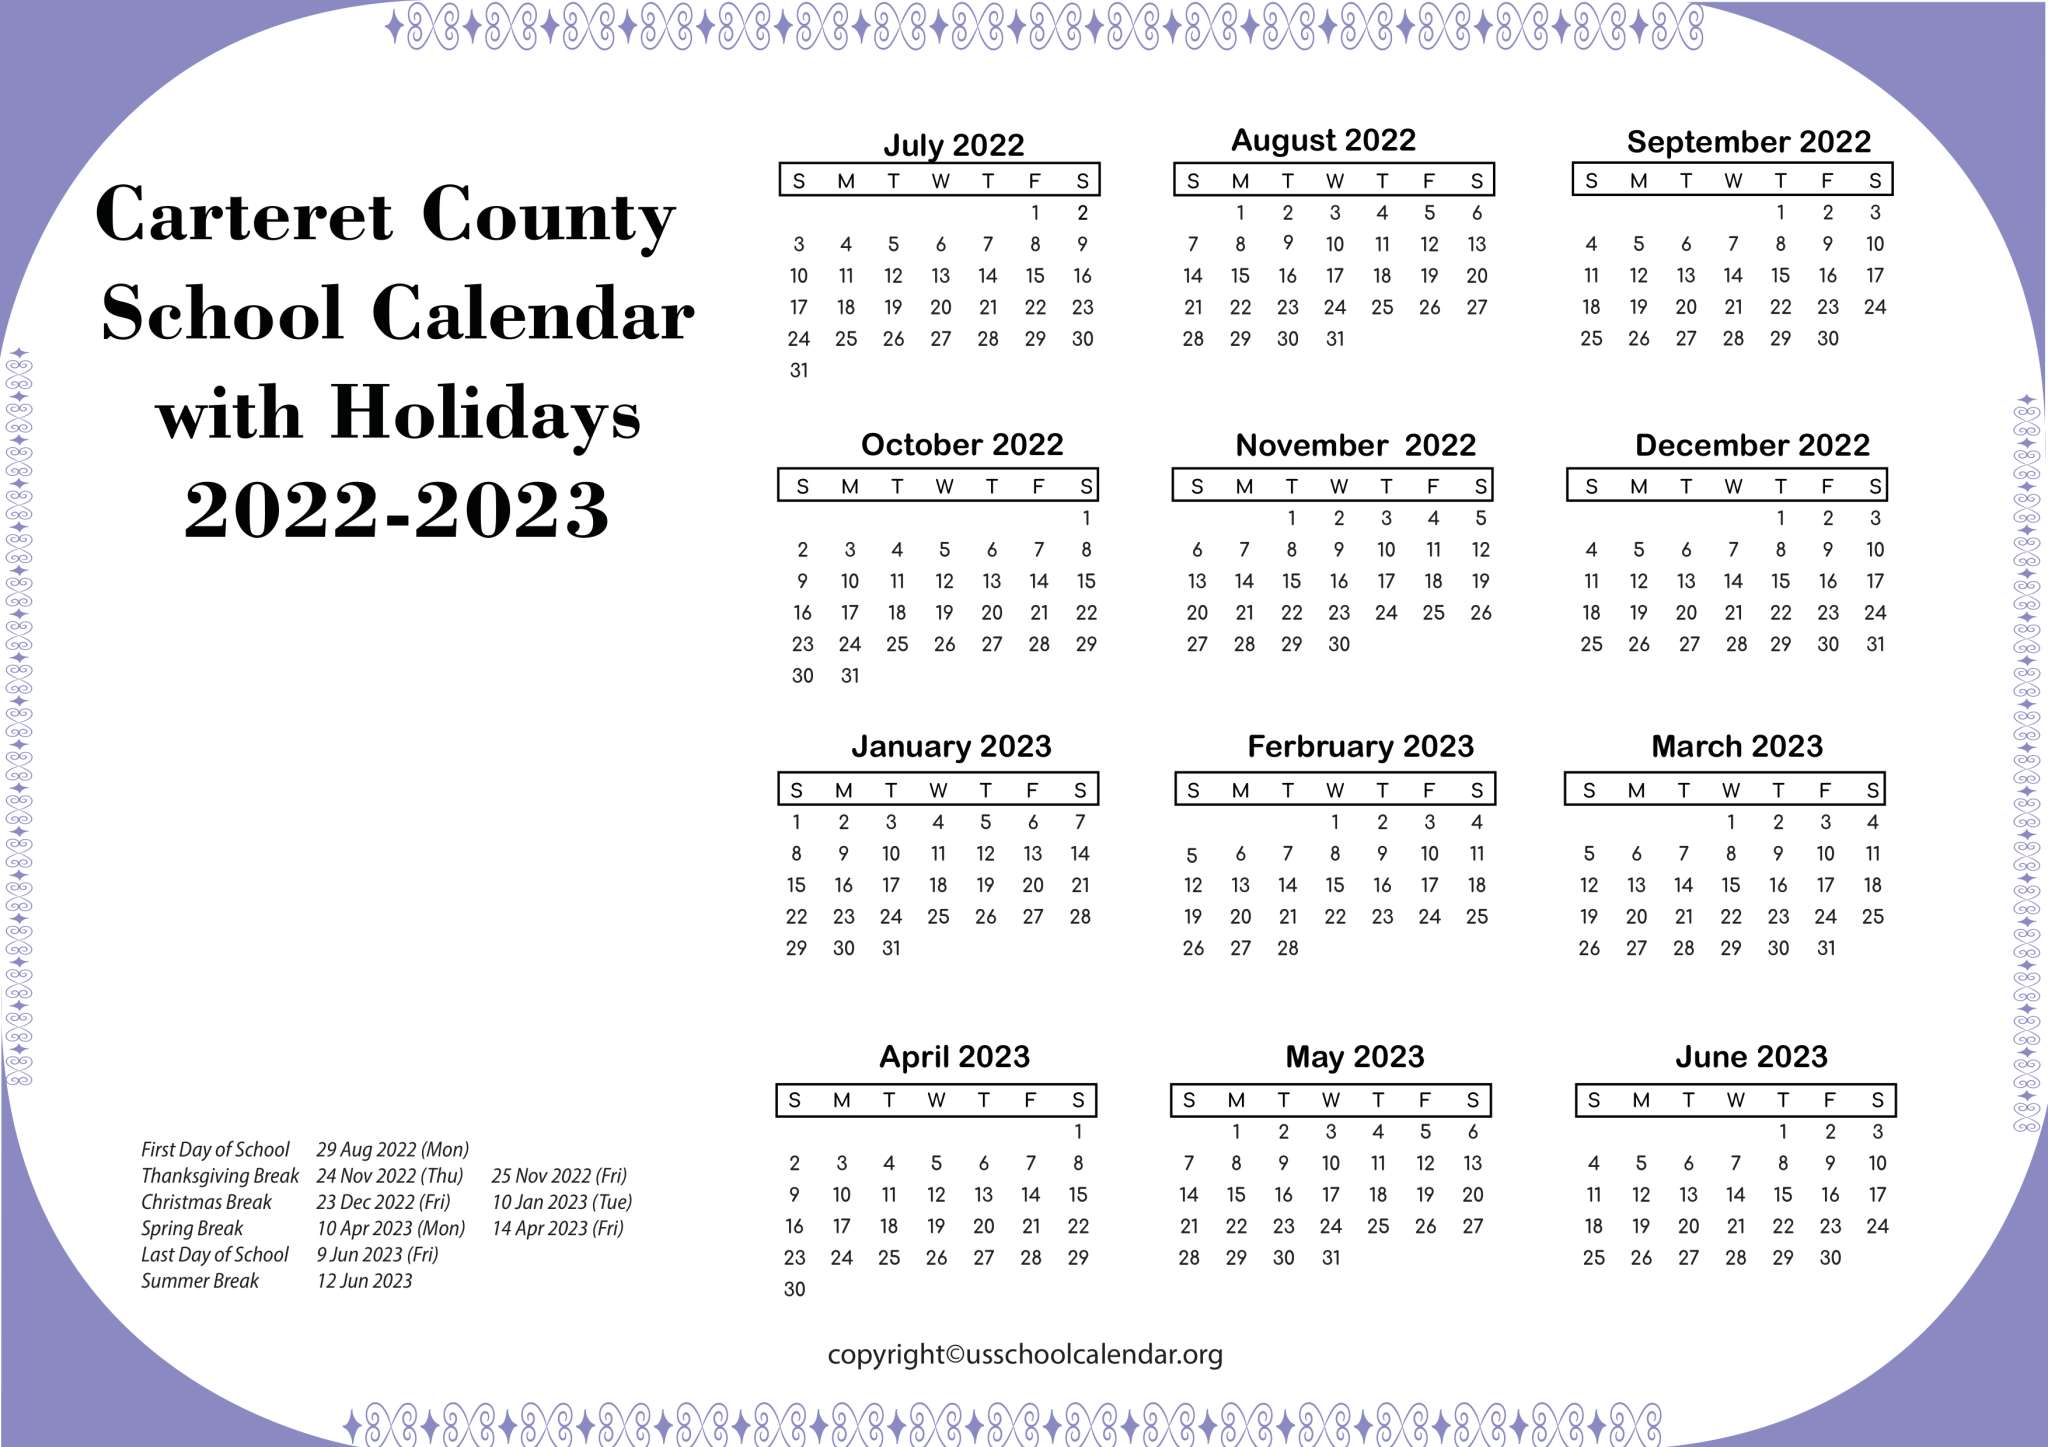 Carteret County School Calendar with Holidays 20222023